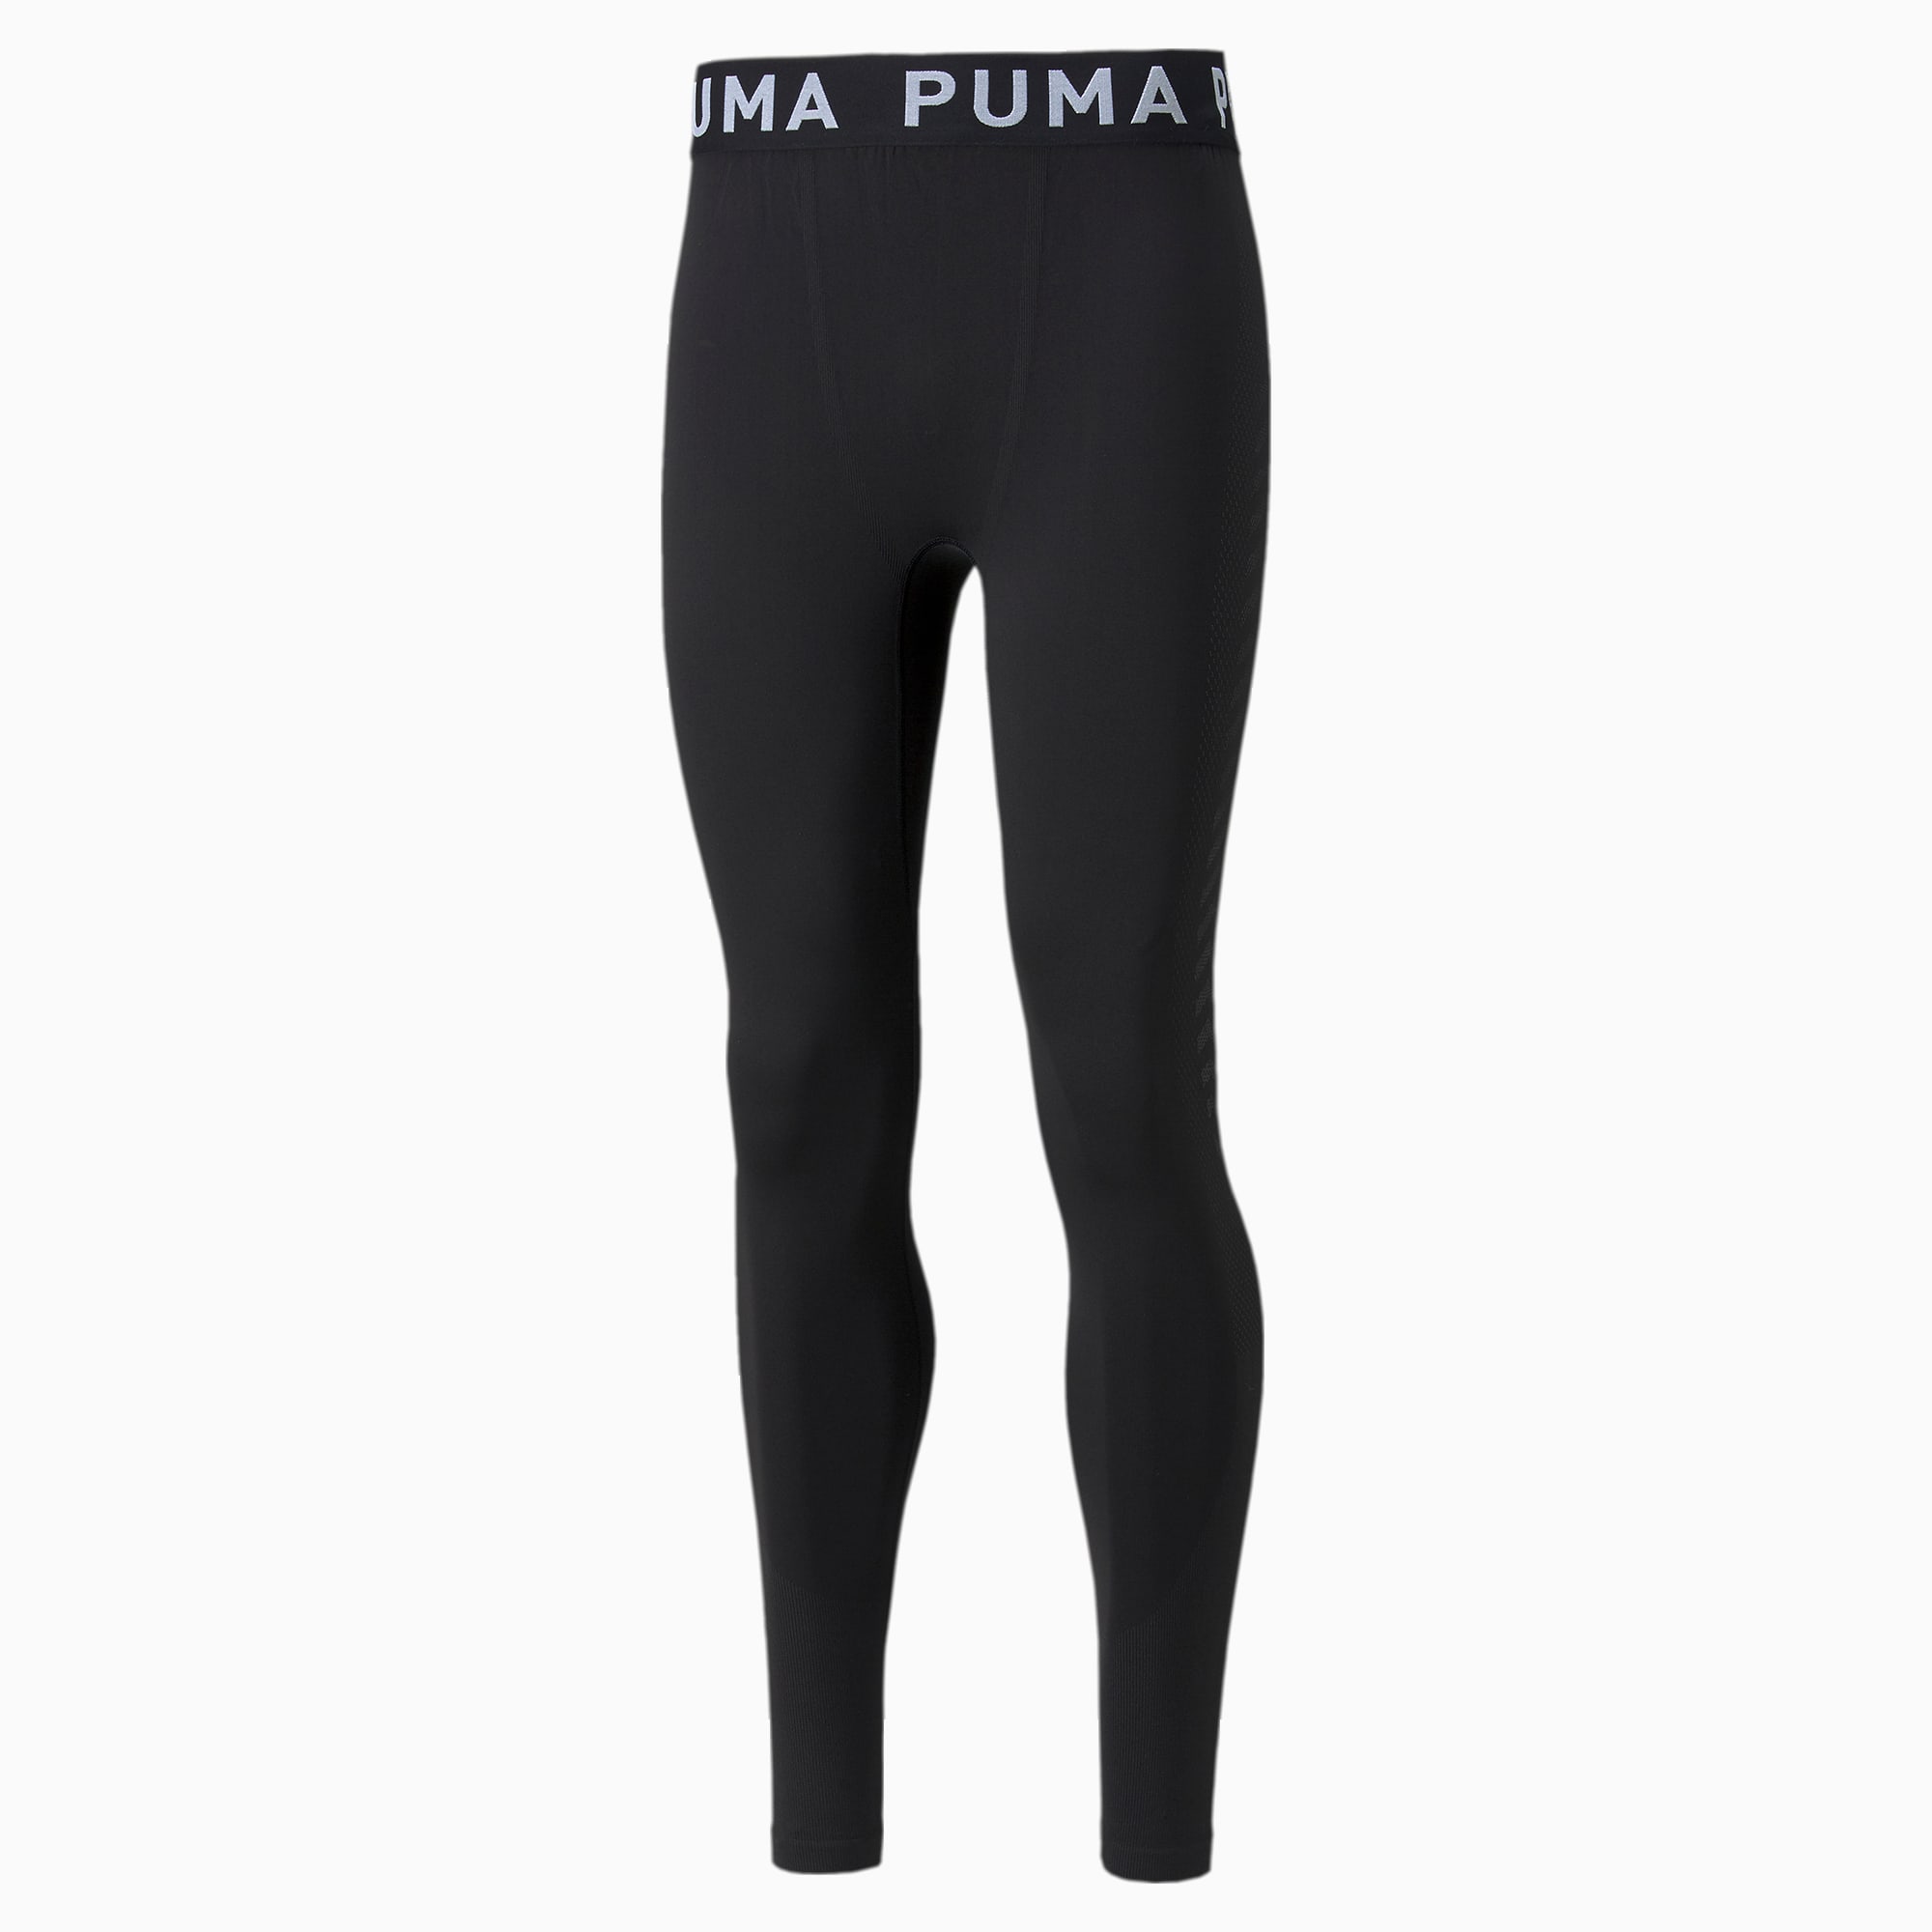 PUMA Formknit Seamless Long Men's Training Tights, Black, Size M, Clothing